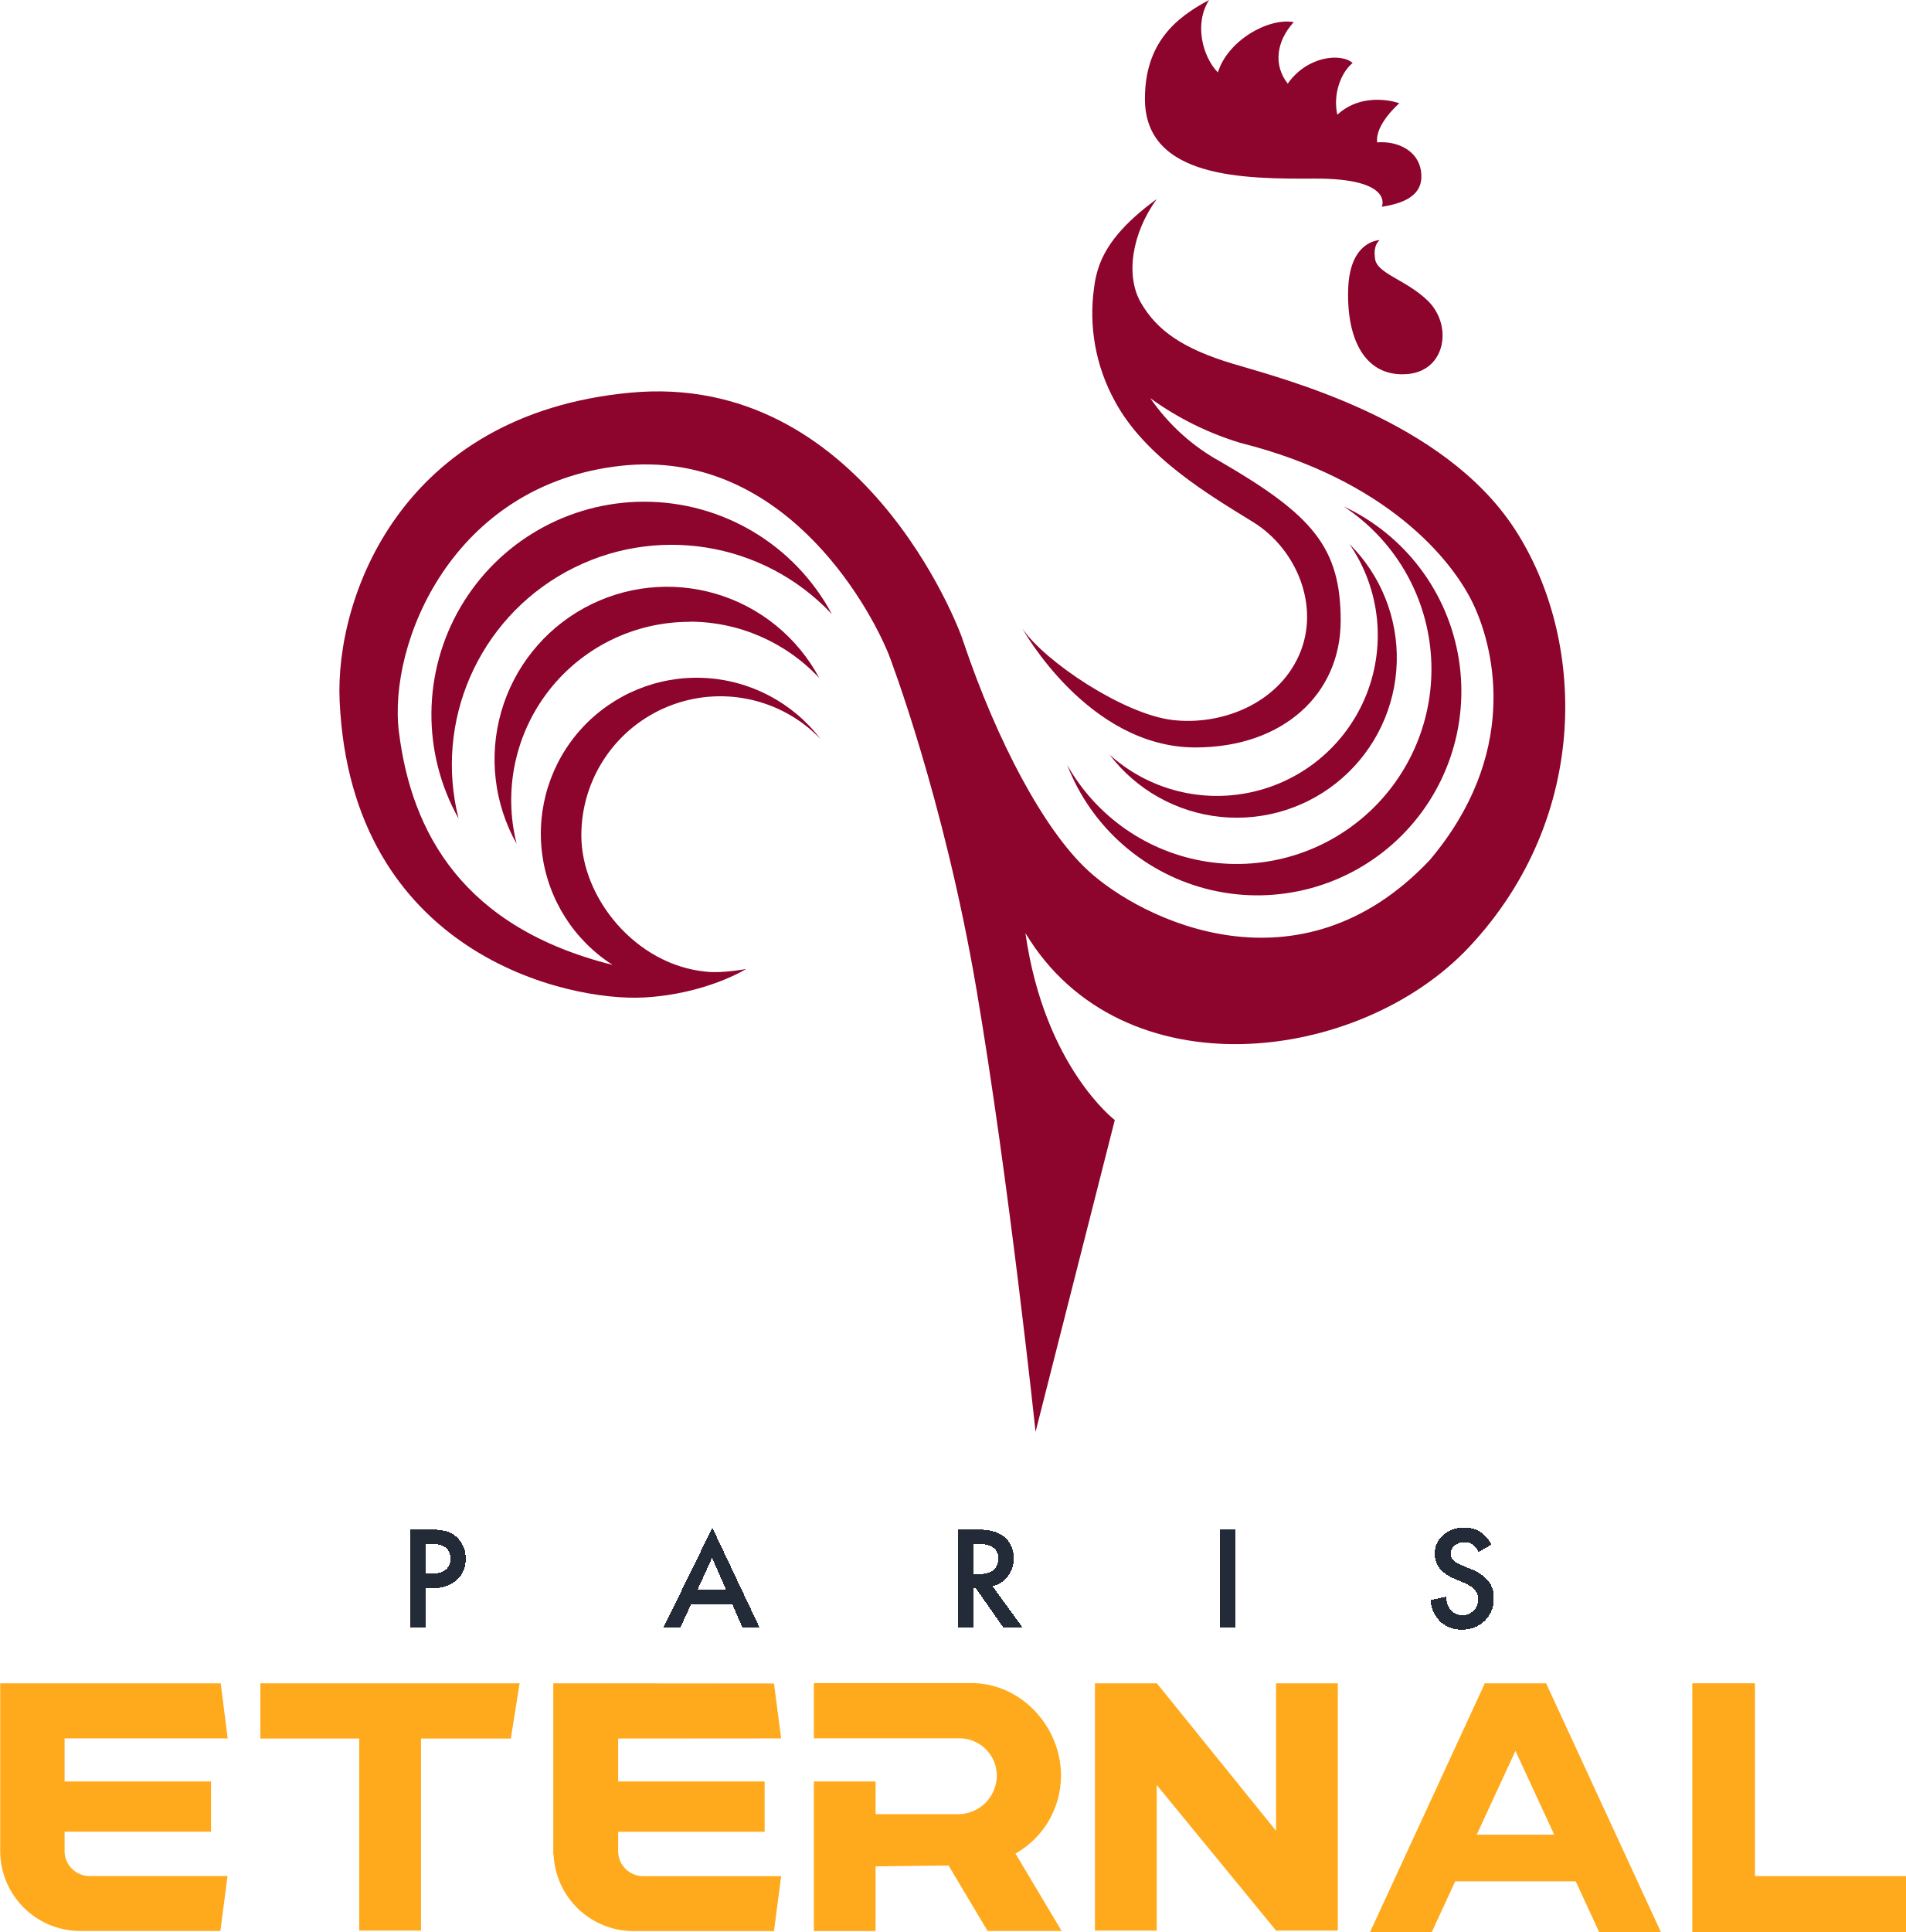 Paris Eternal team logo